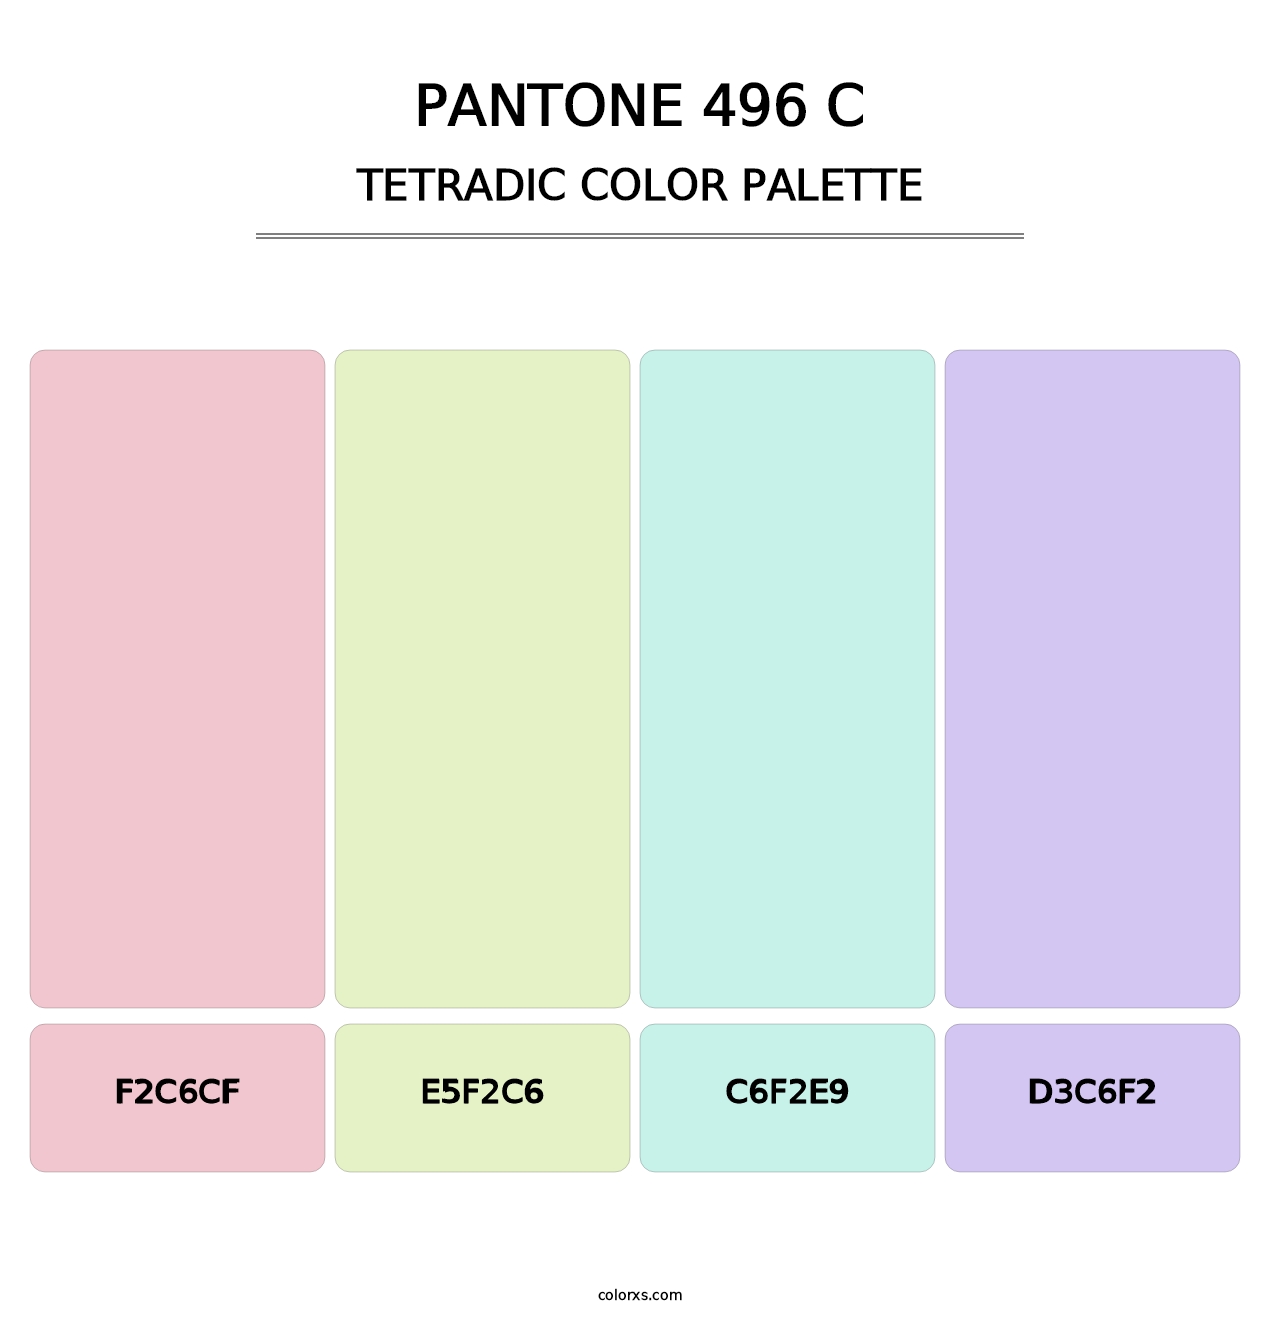 PANTONE 496 C - Tetradic Color Palette